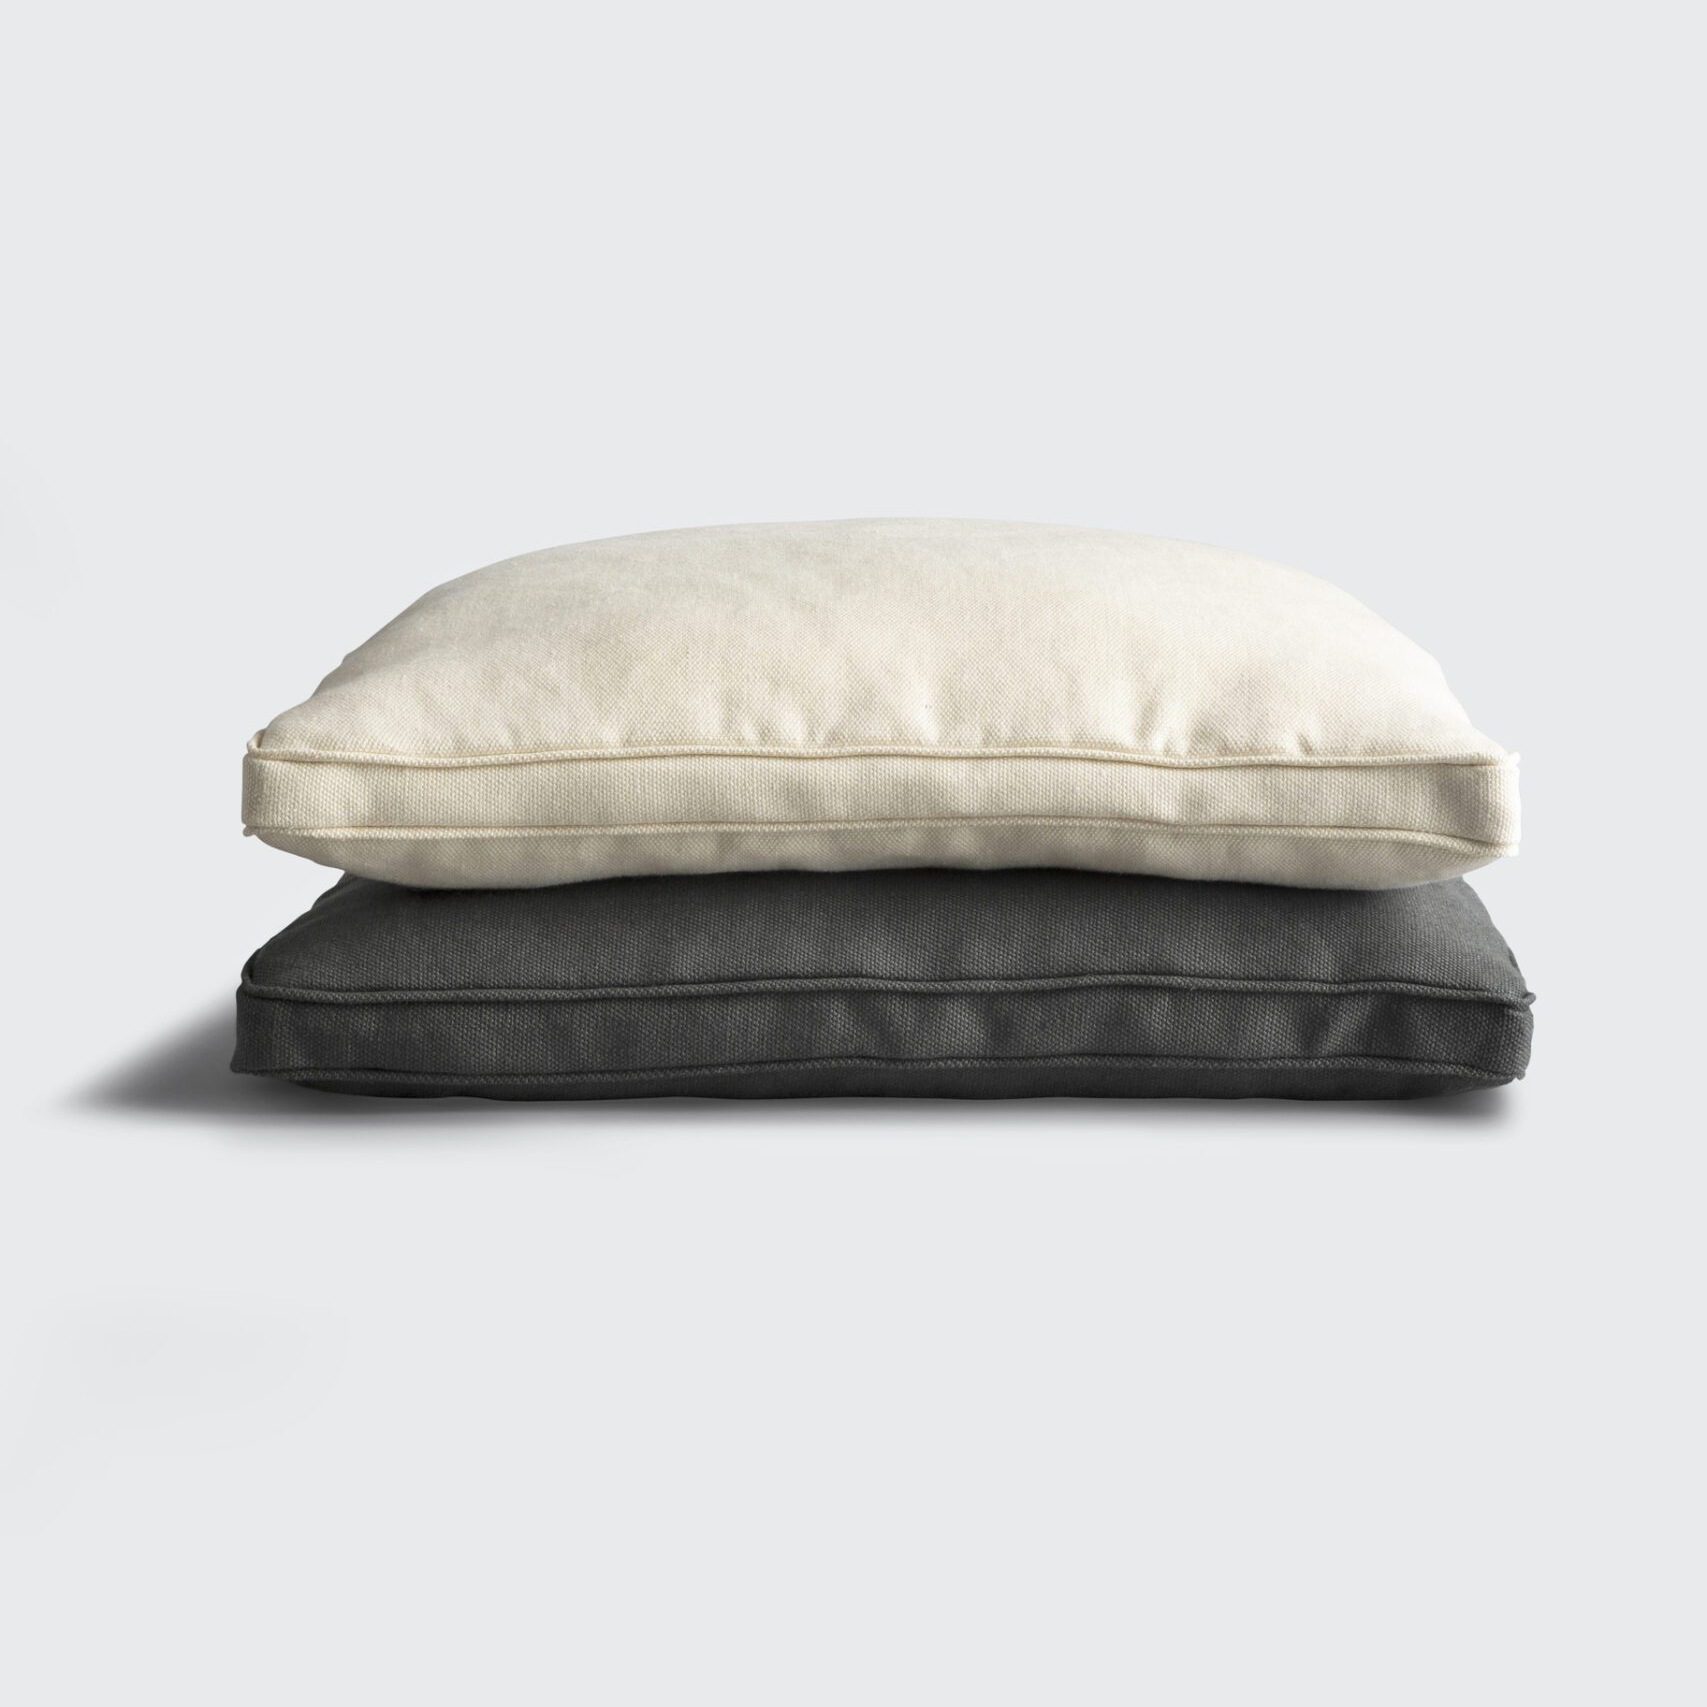 SAV linen set pillows interior design architecture product textiles luxury premium handmade detail charcoal white 58cmx4cm volume intemporal timeless Sofa